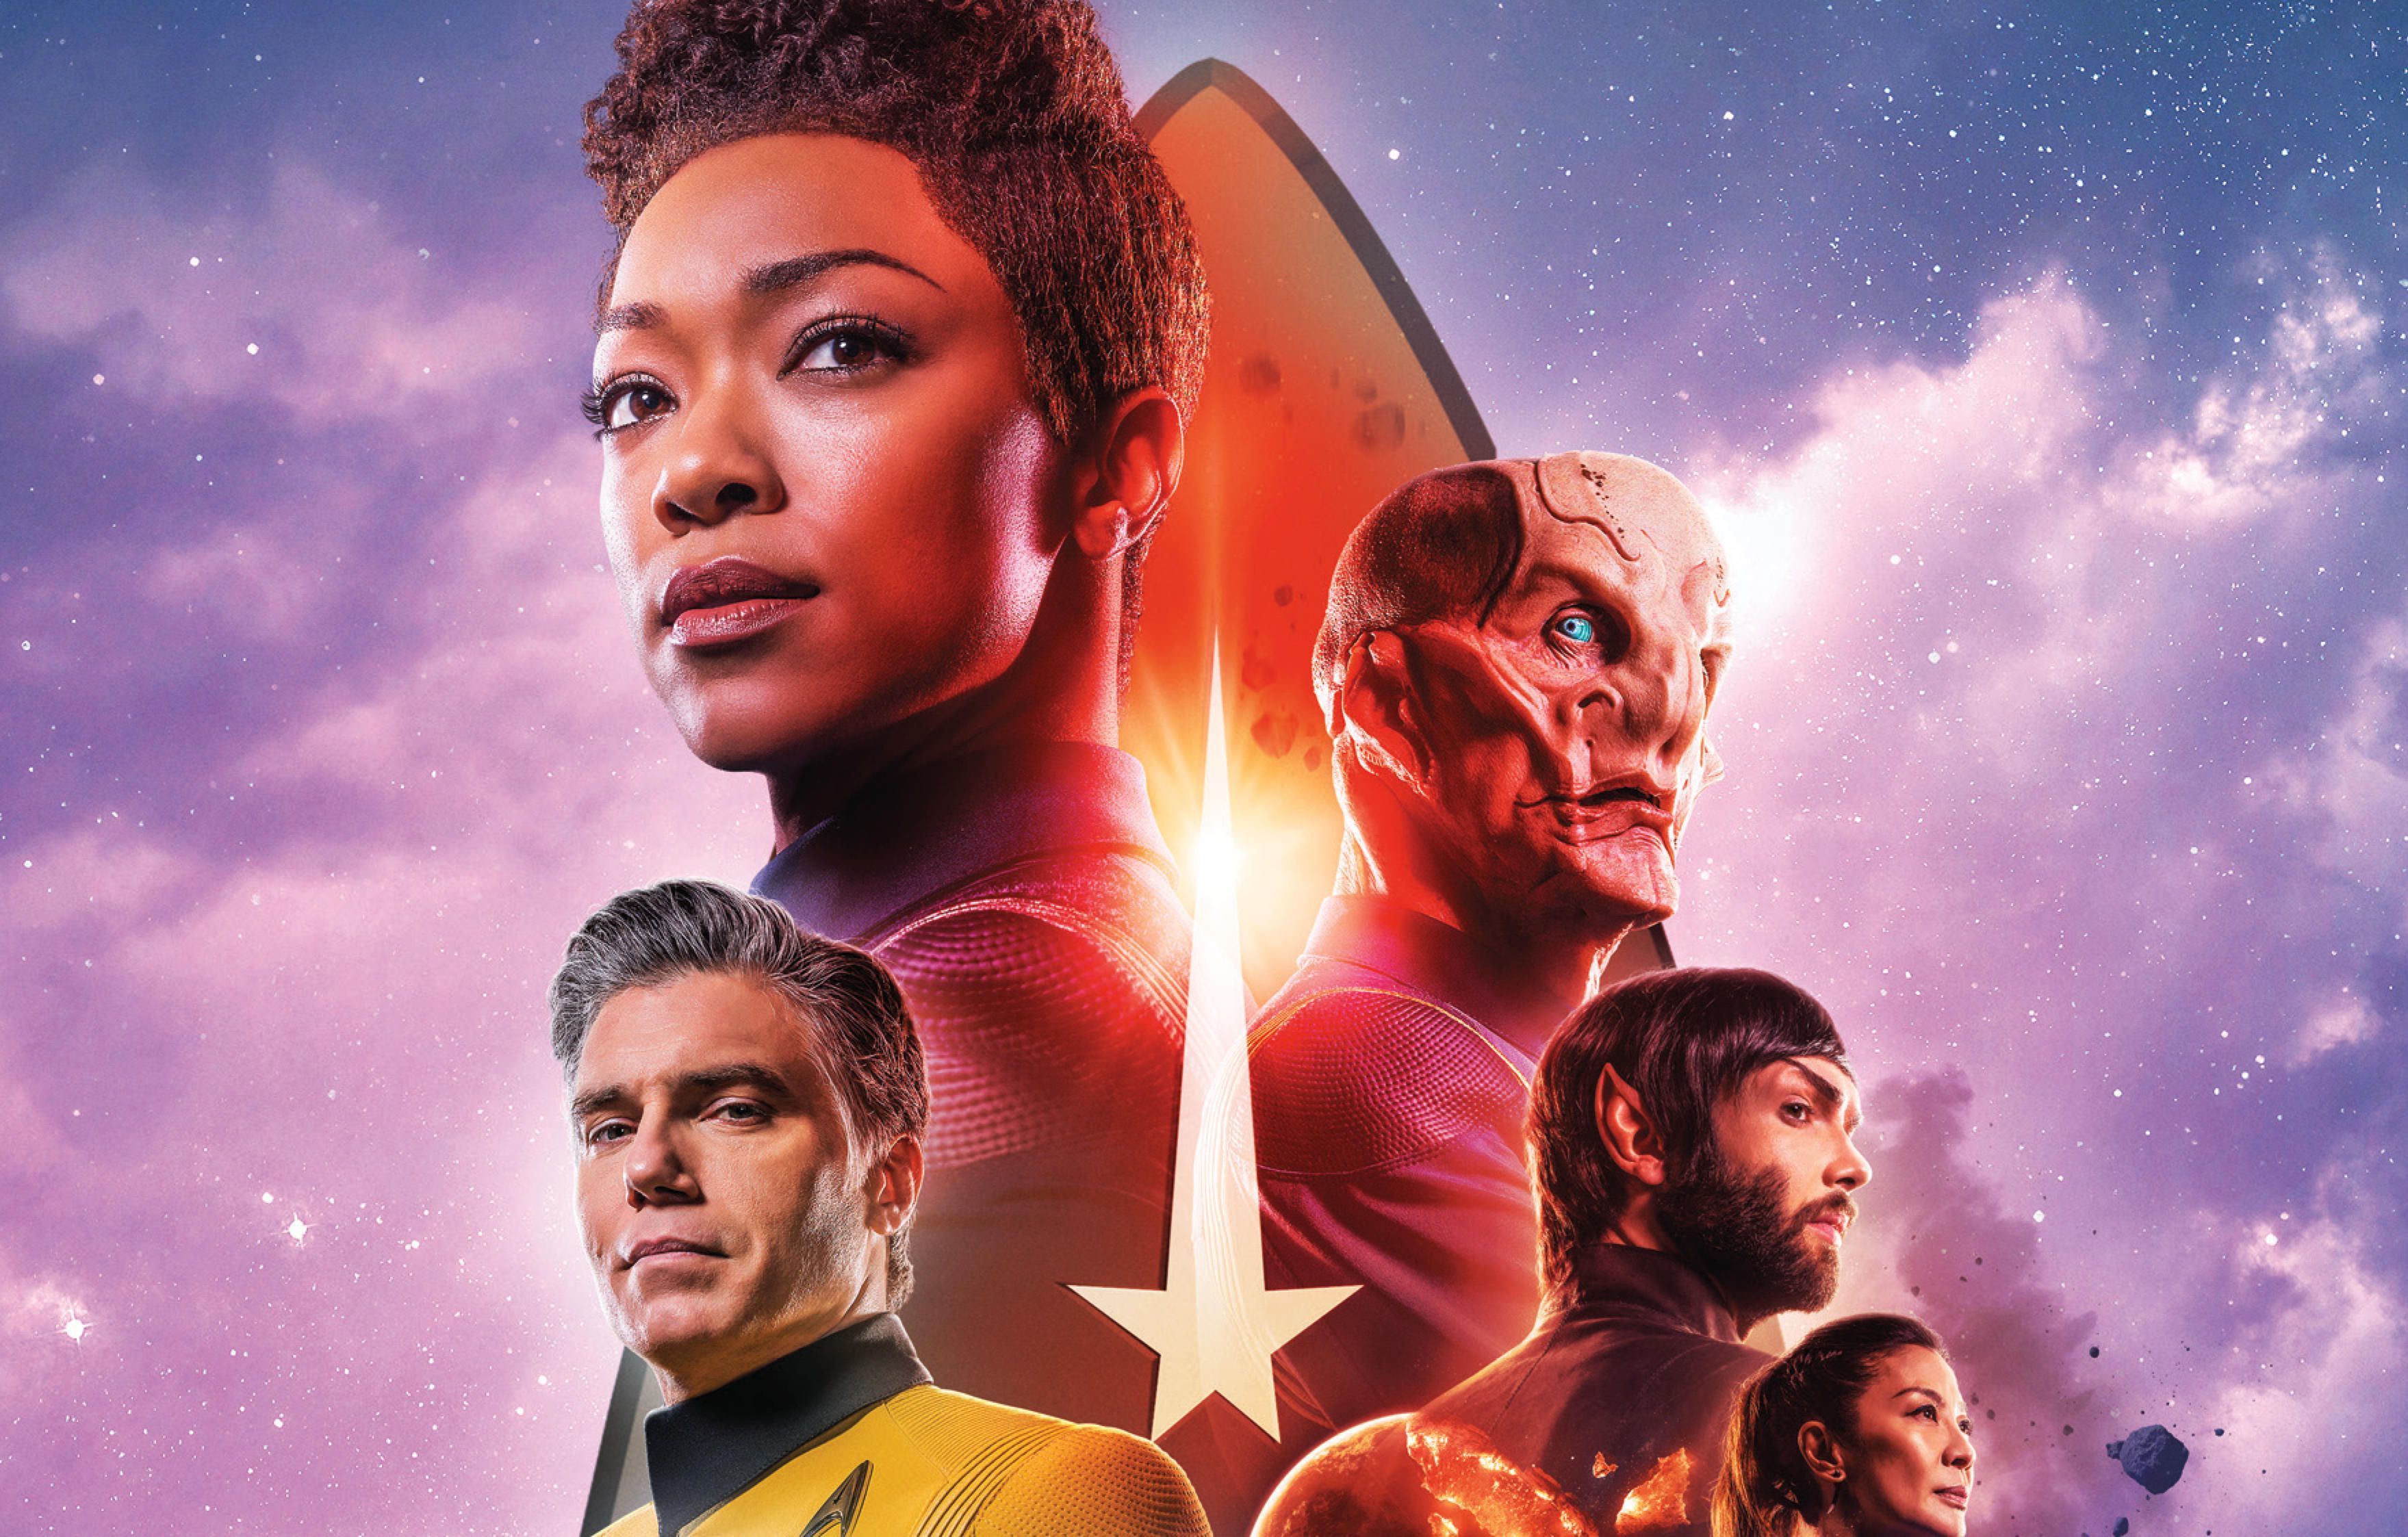 Star Trek Discovery Season 2 Poster 5K Wallpaper, HD TV Series 4K Wallpaper, Image, Photo and Background